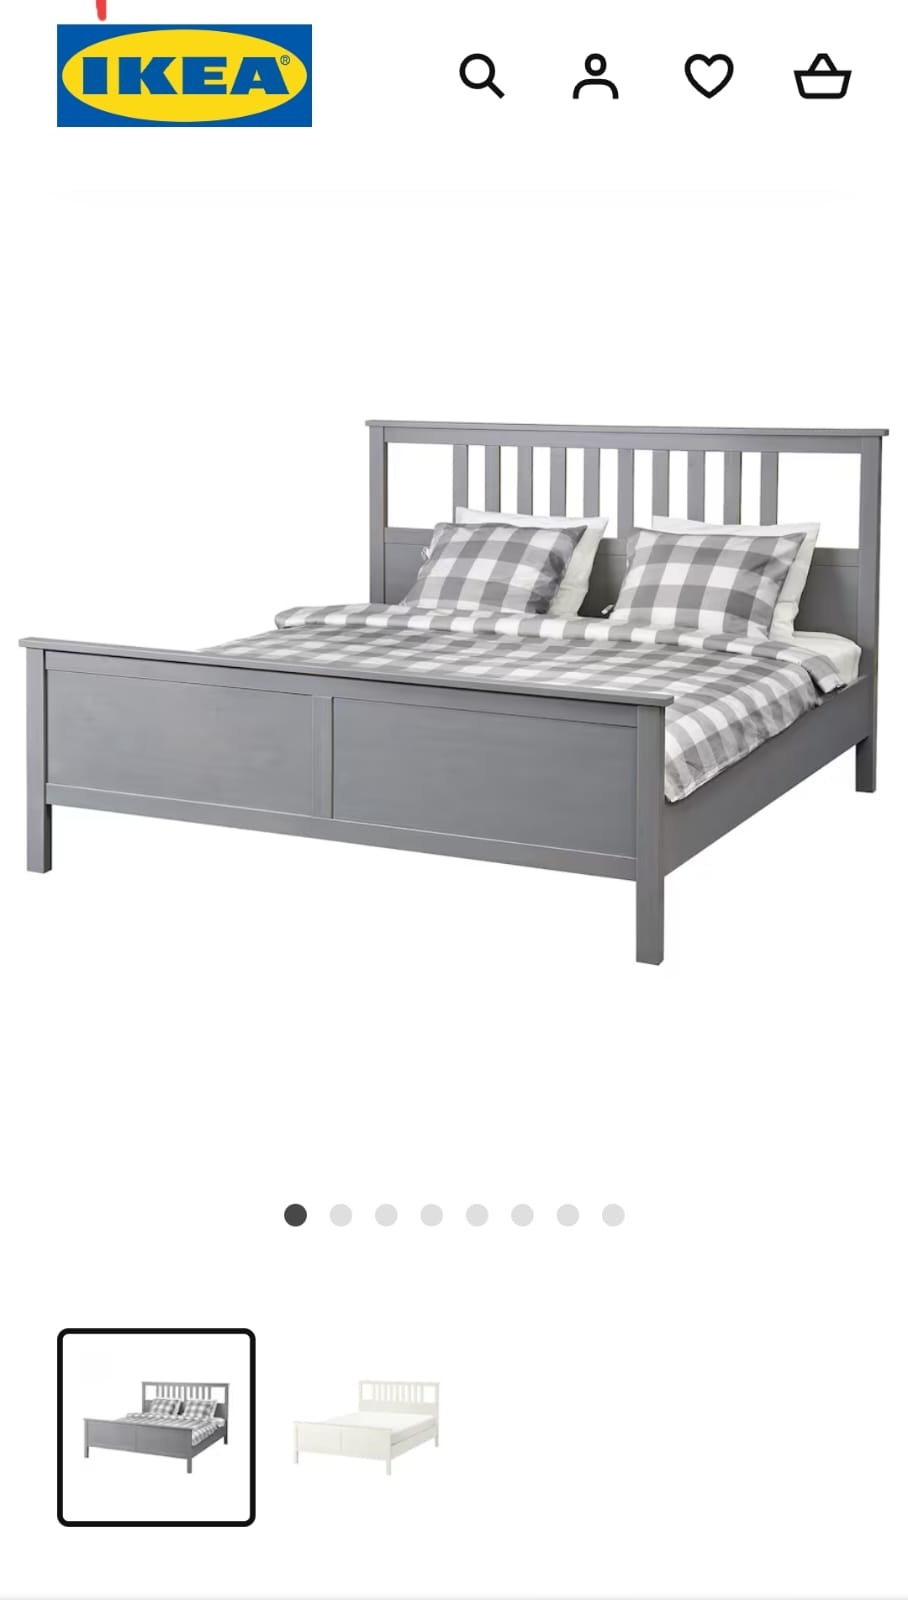 IKEA hemnes kingsize bed set